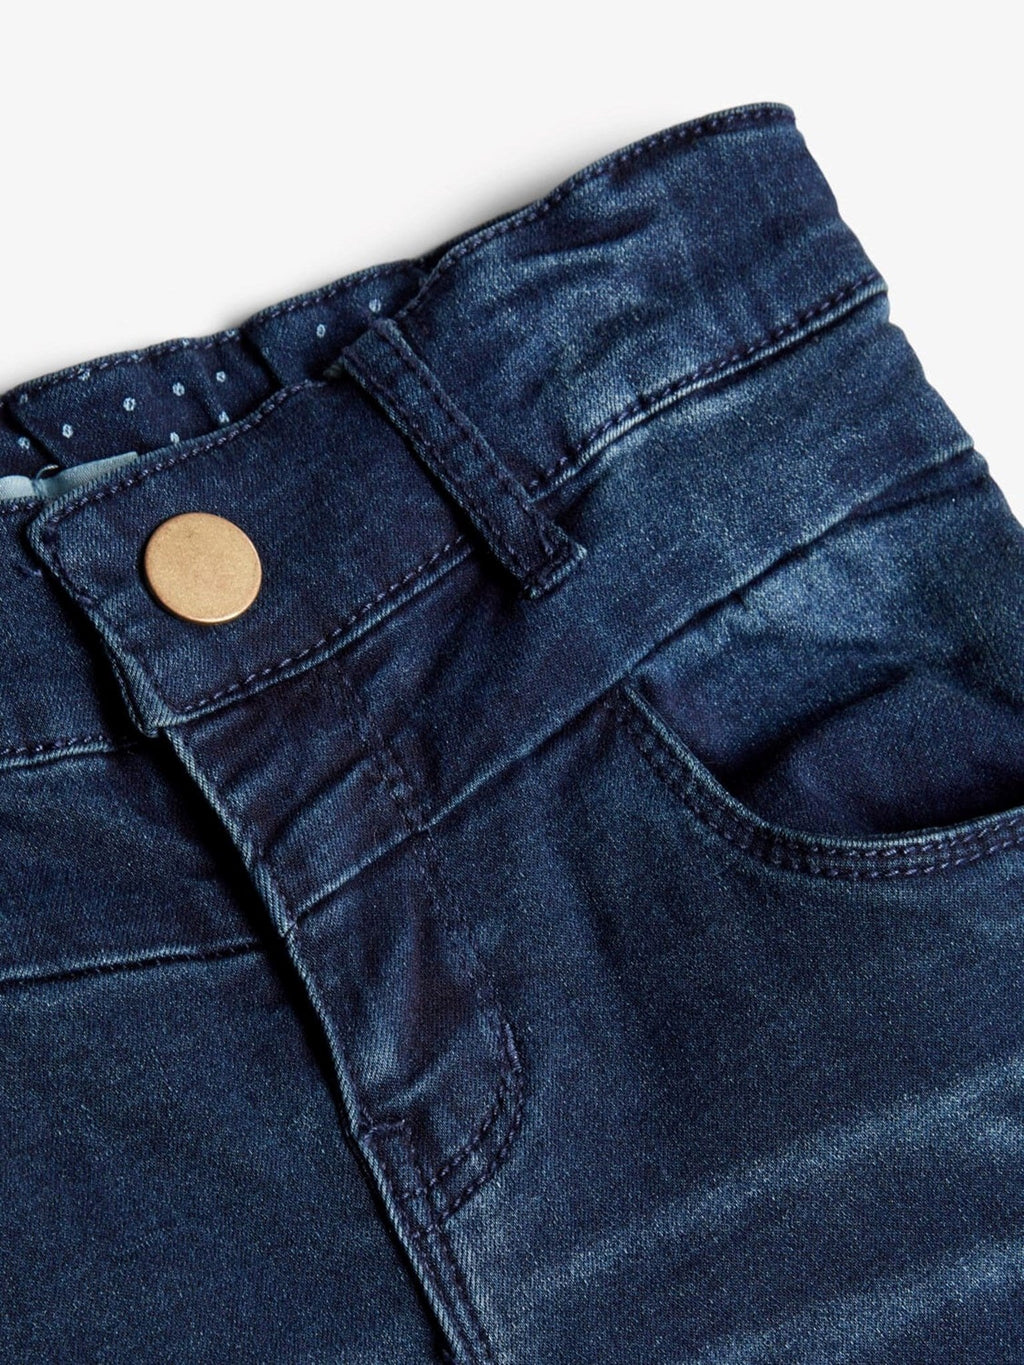 Polly skinny jeans - donkerblauwe denim